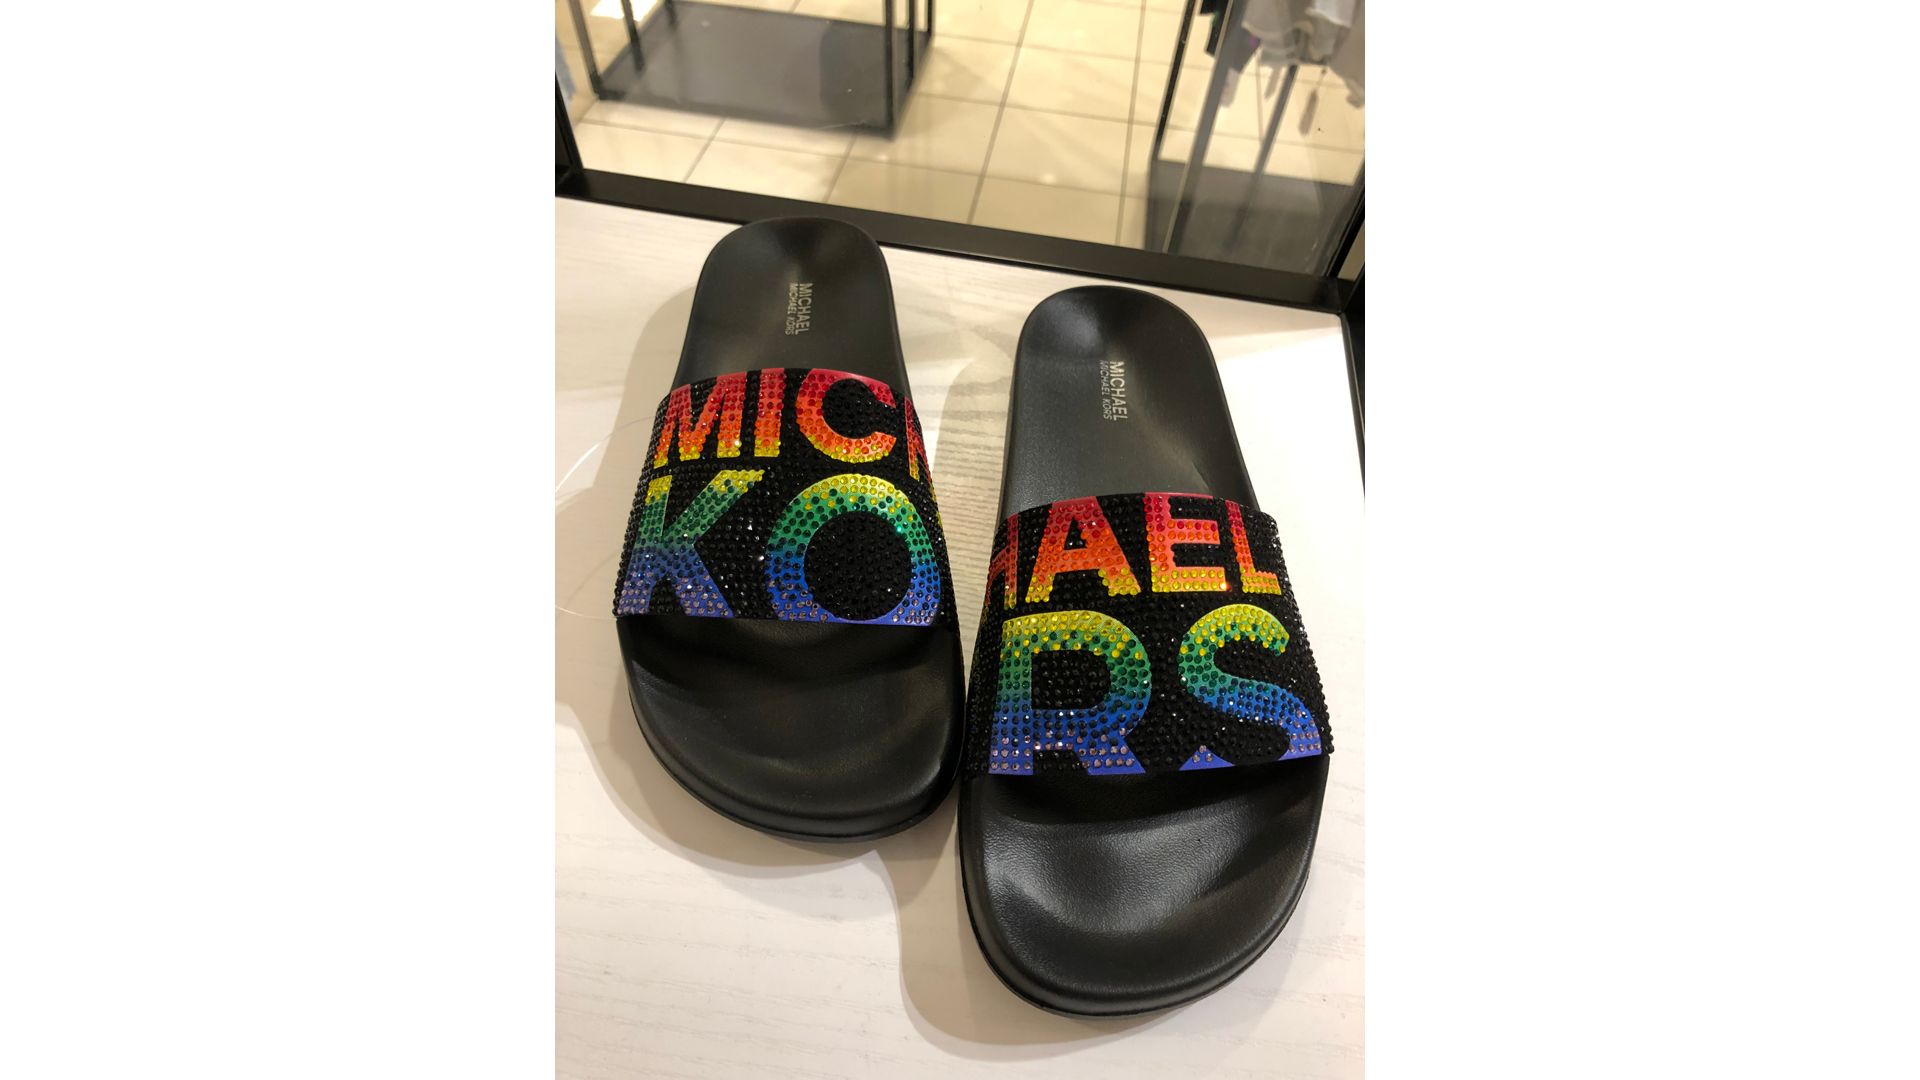 michael kors pride sandals